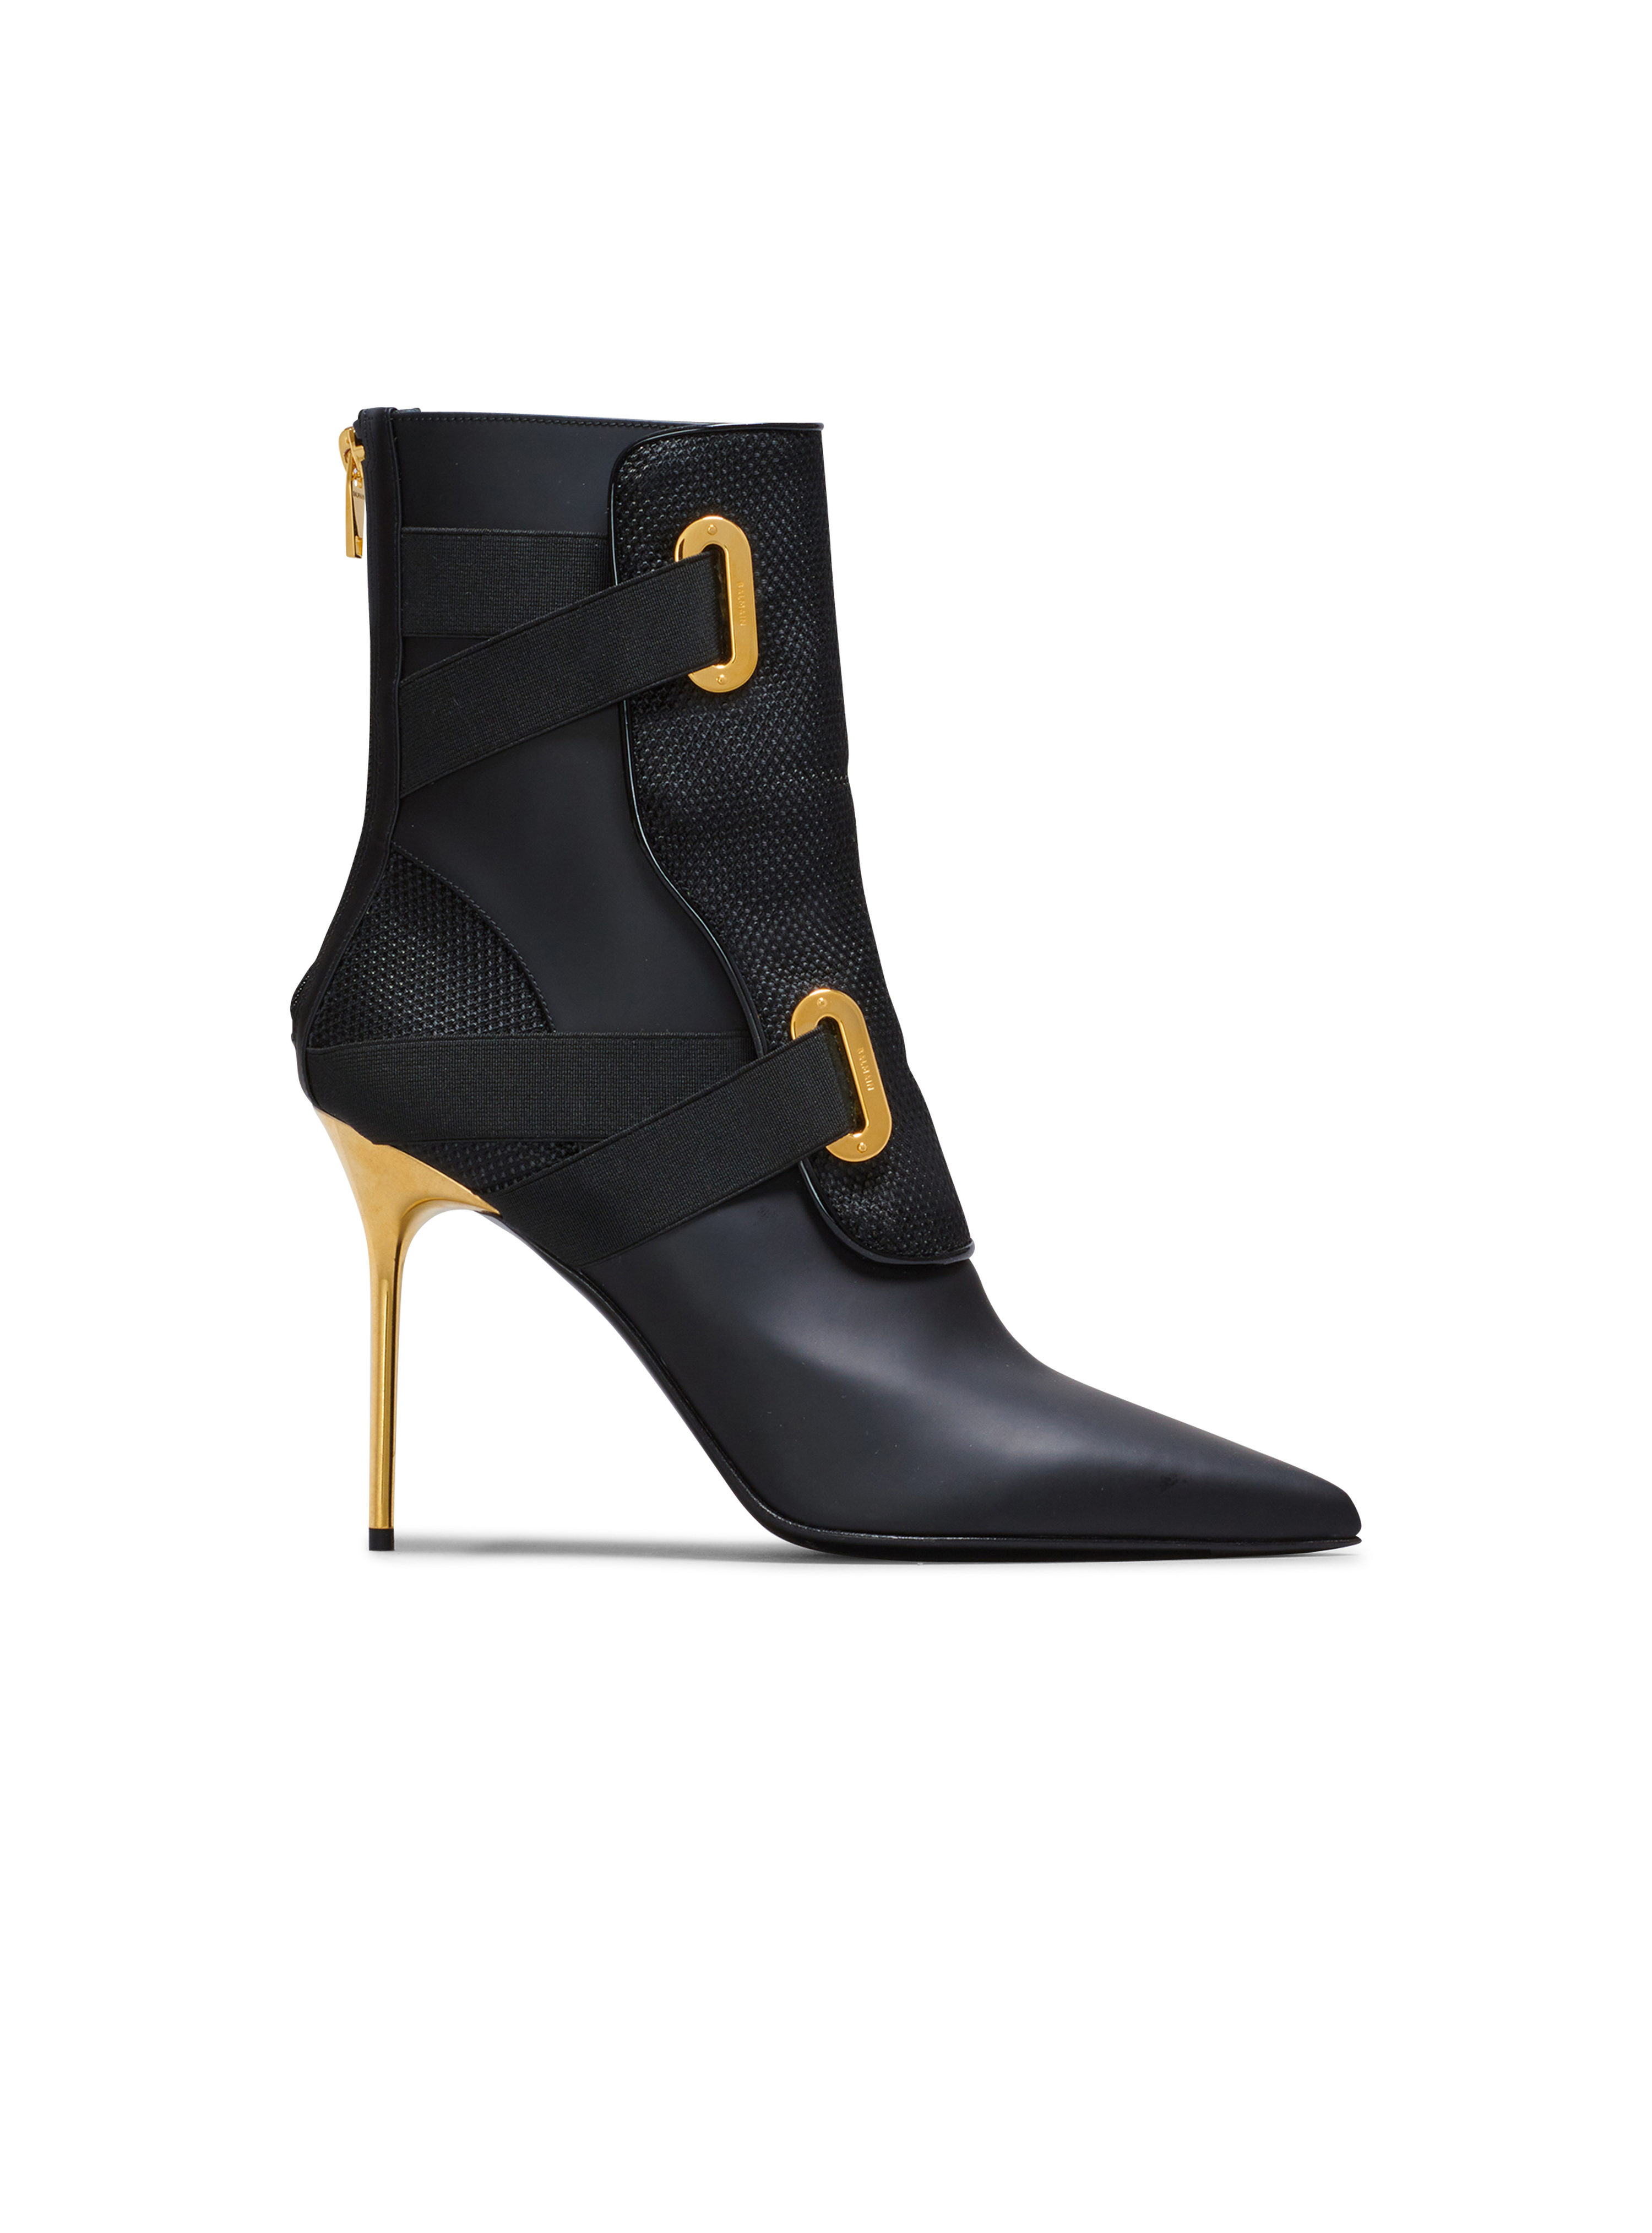 Venus leather ankle boots, black